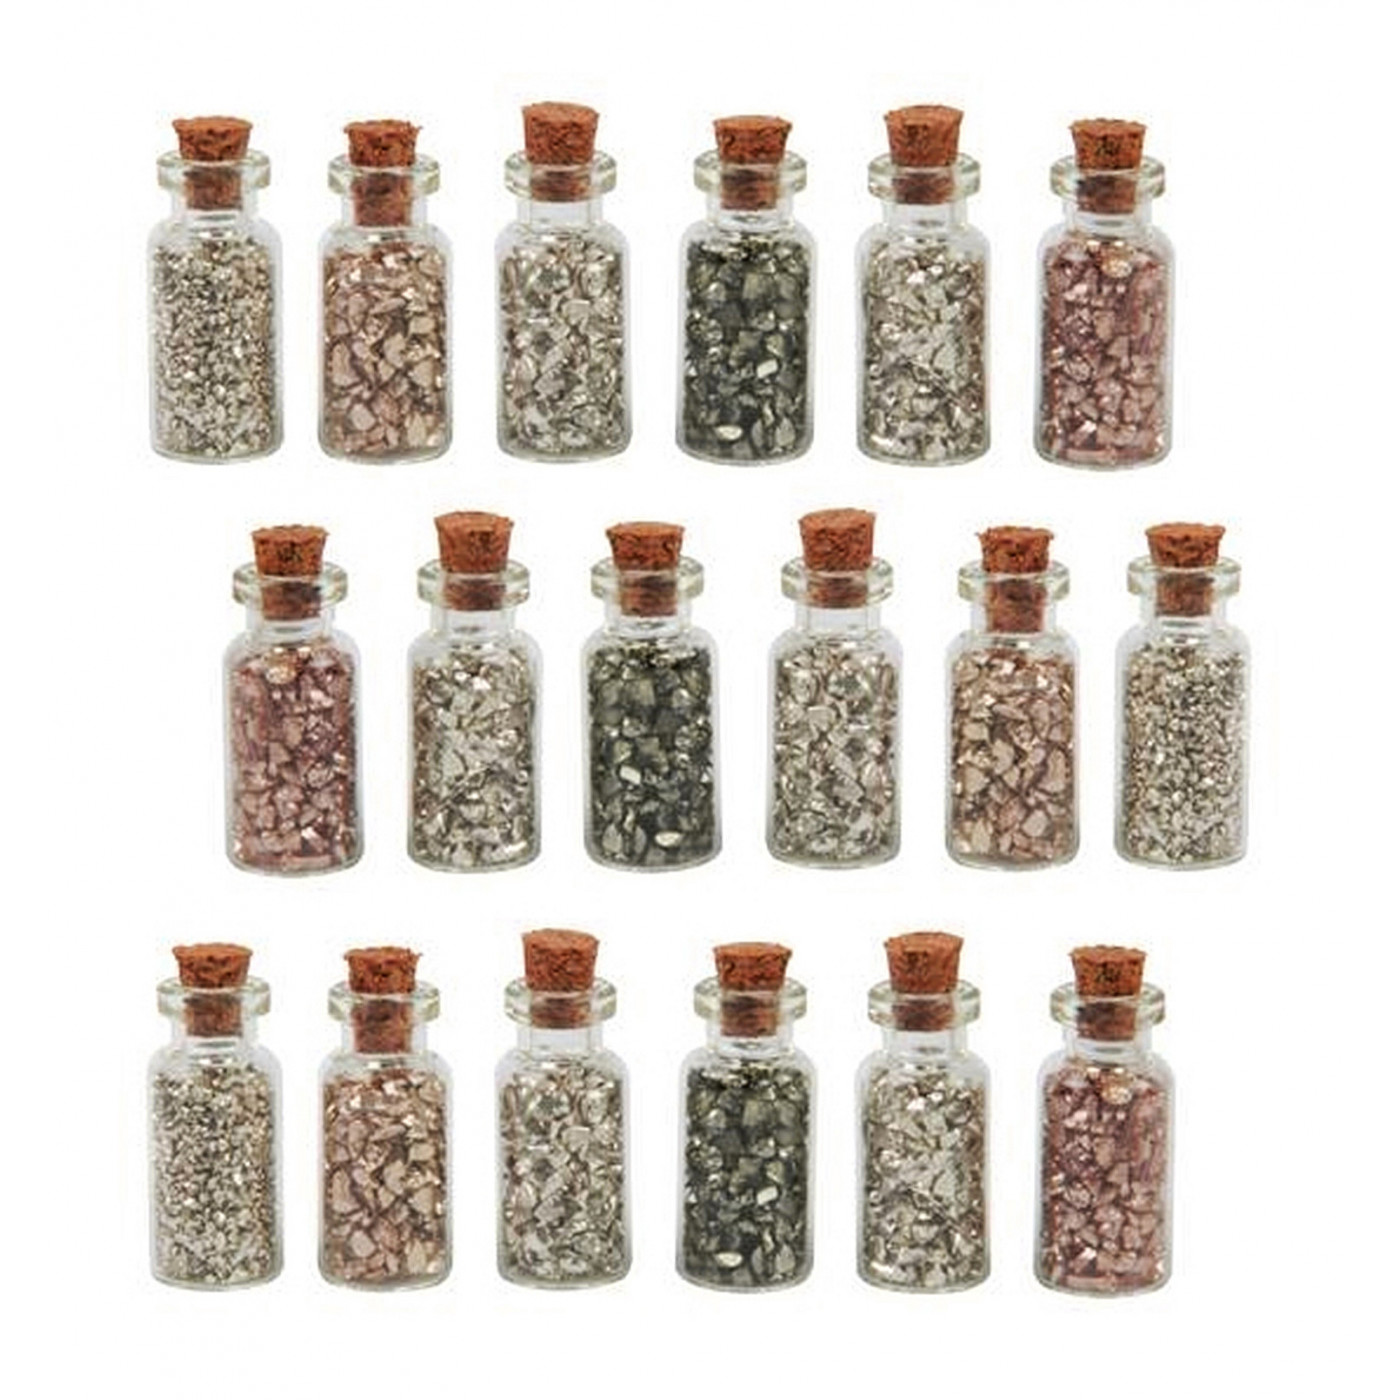 Set of 18 mini bottles with mini decorative stones (type 3)